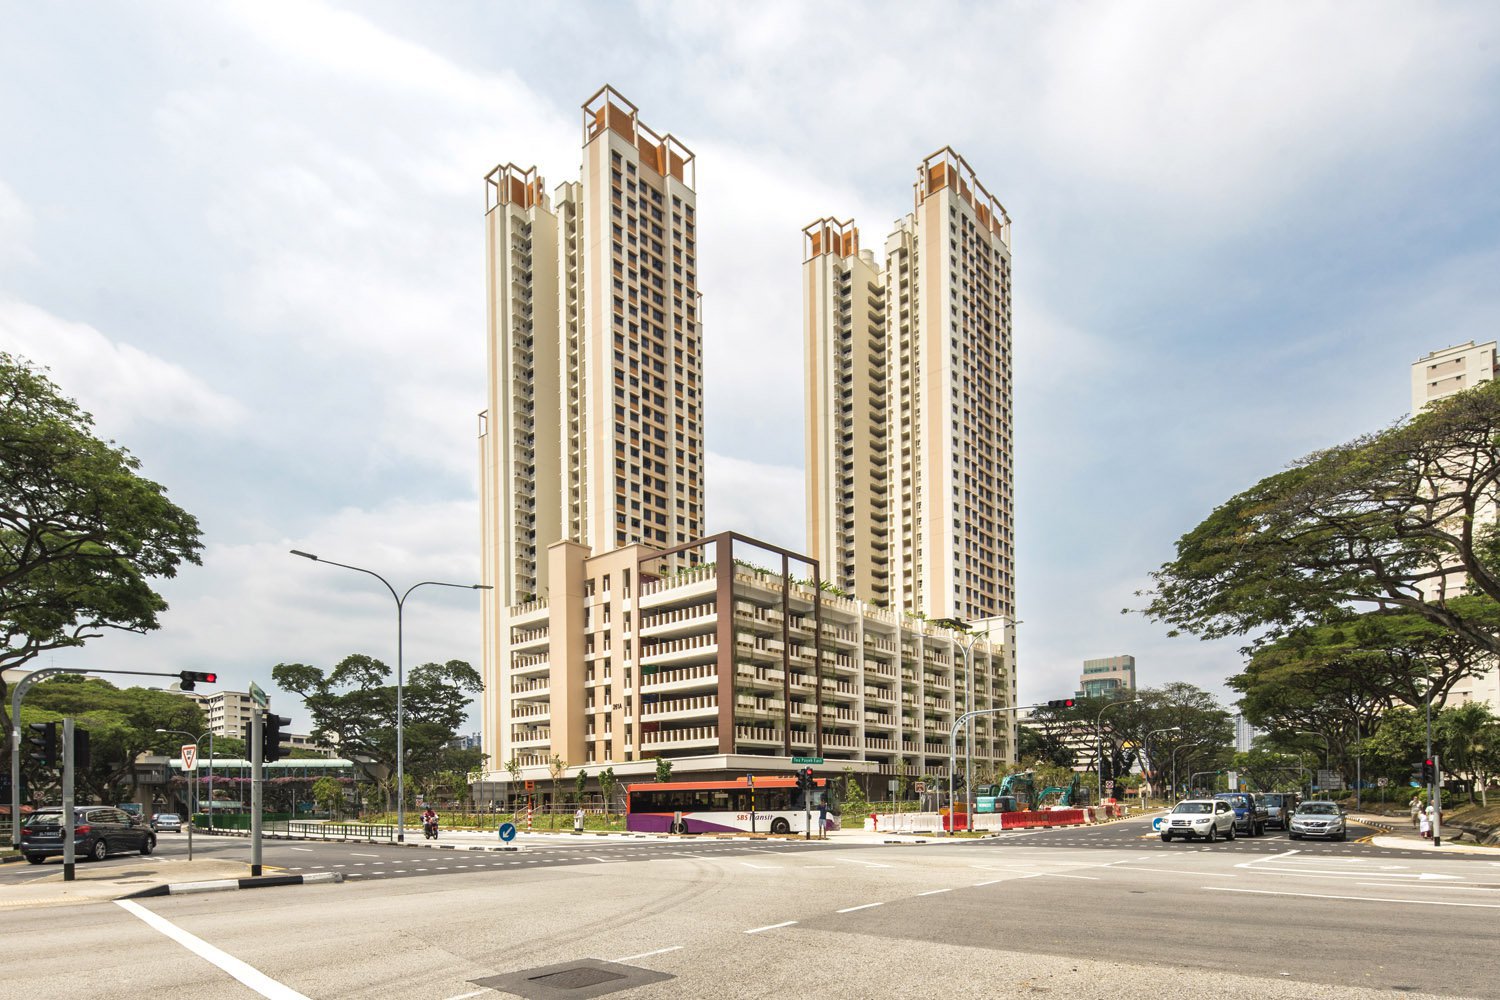 Image of HDB TOA PAYOH APEX, Singapore